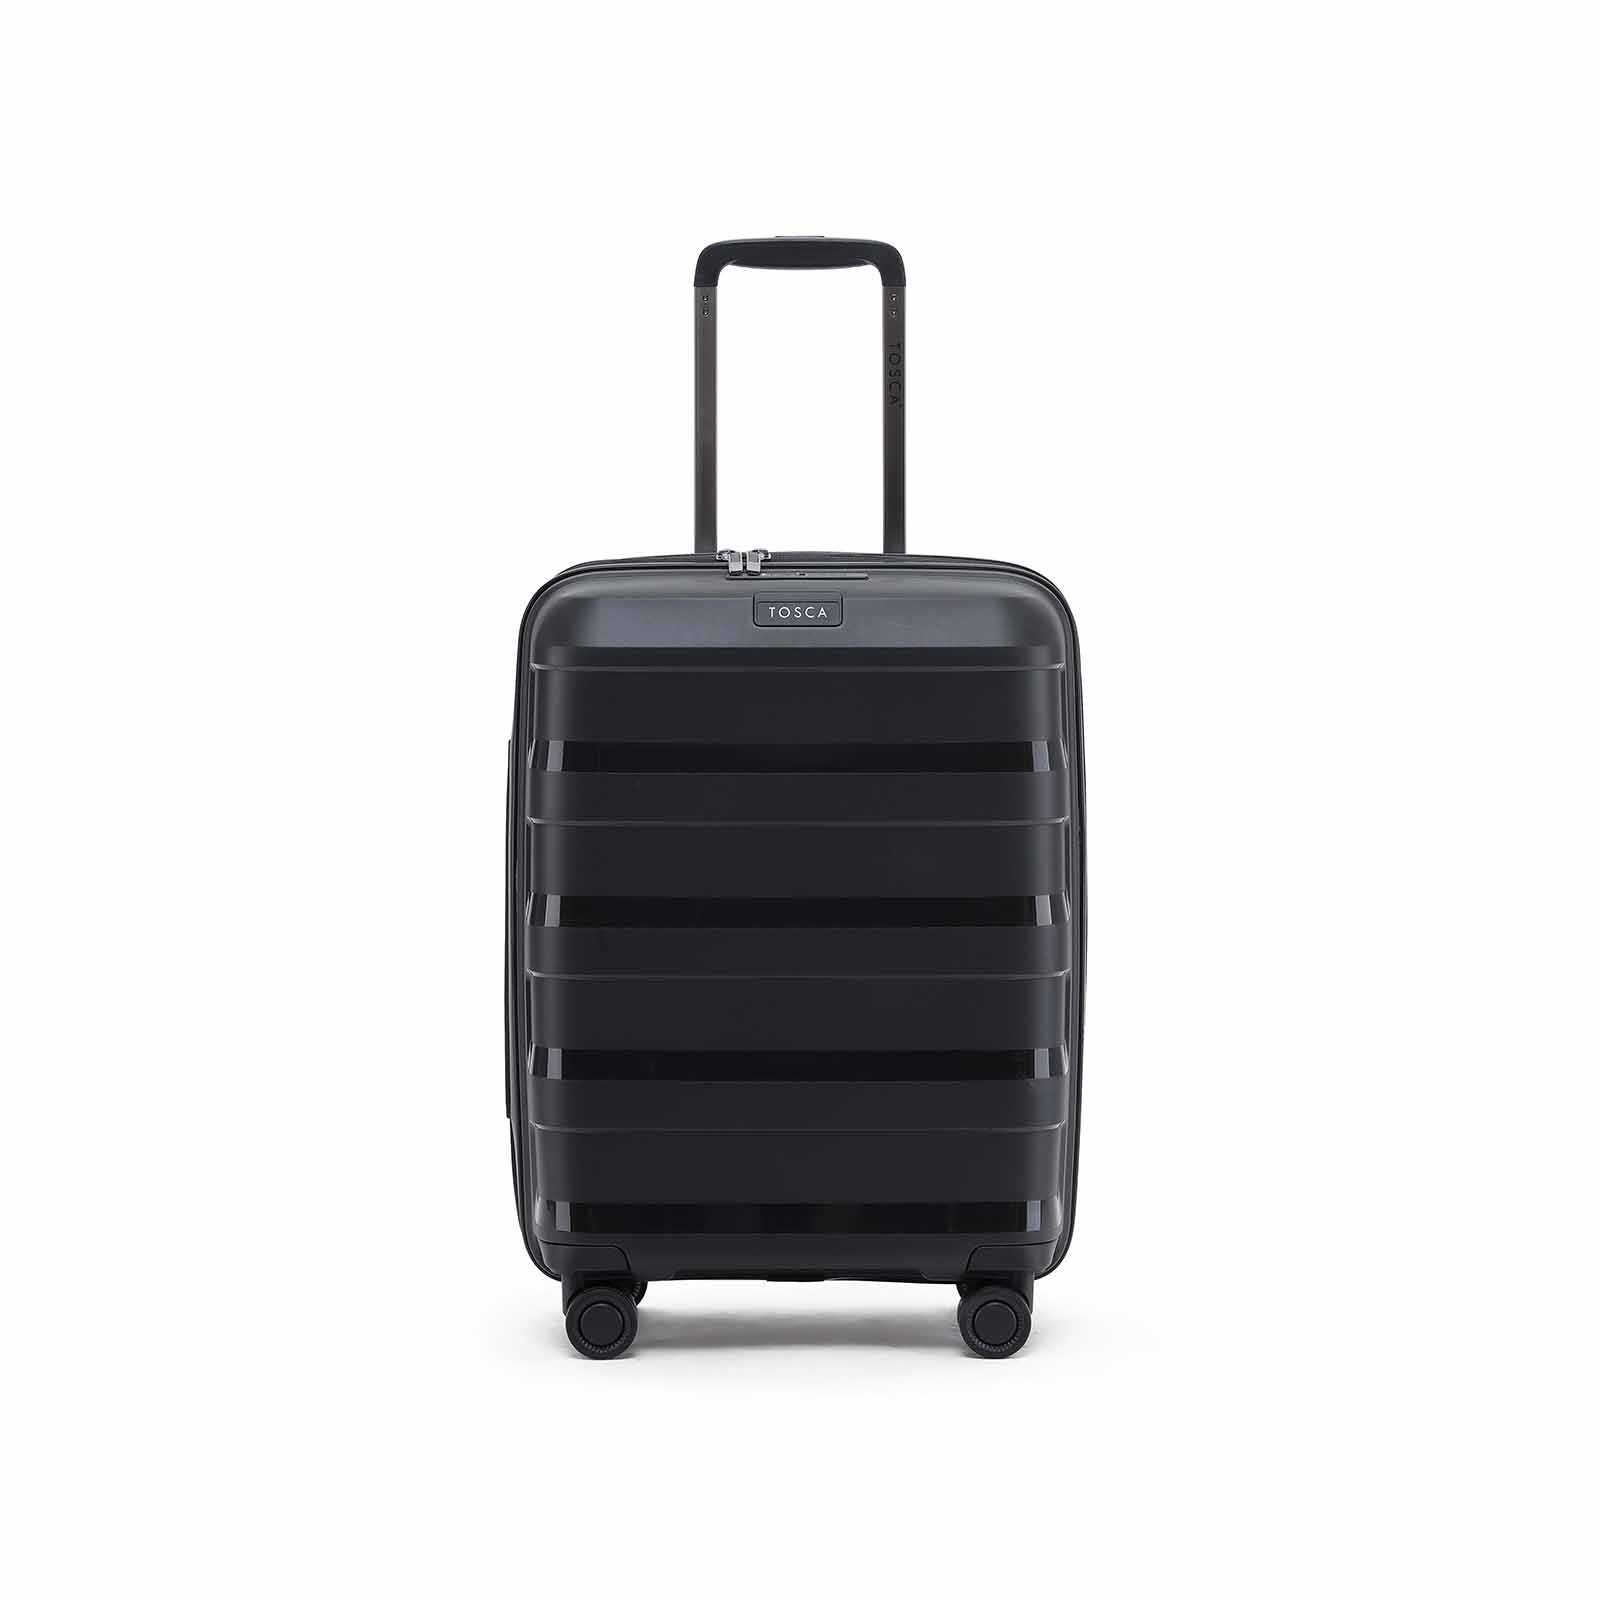 Tosca Comet 4 Wheel 55cm Carry-On Suitcase Black